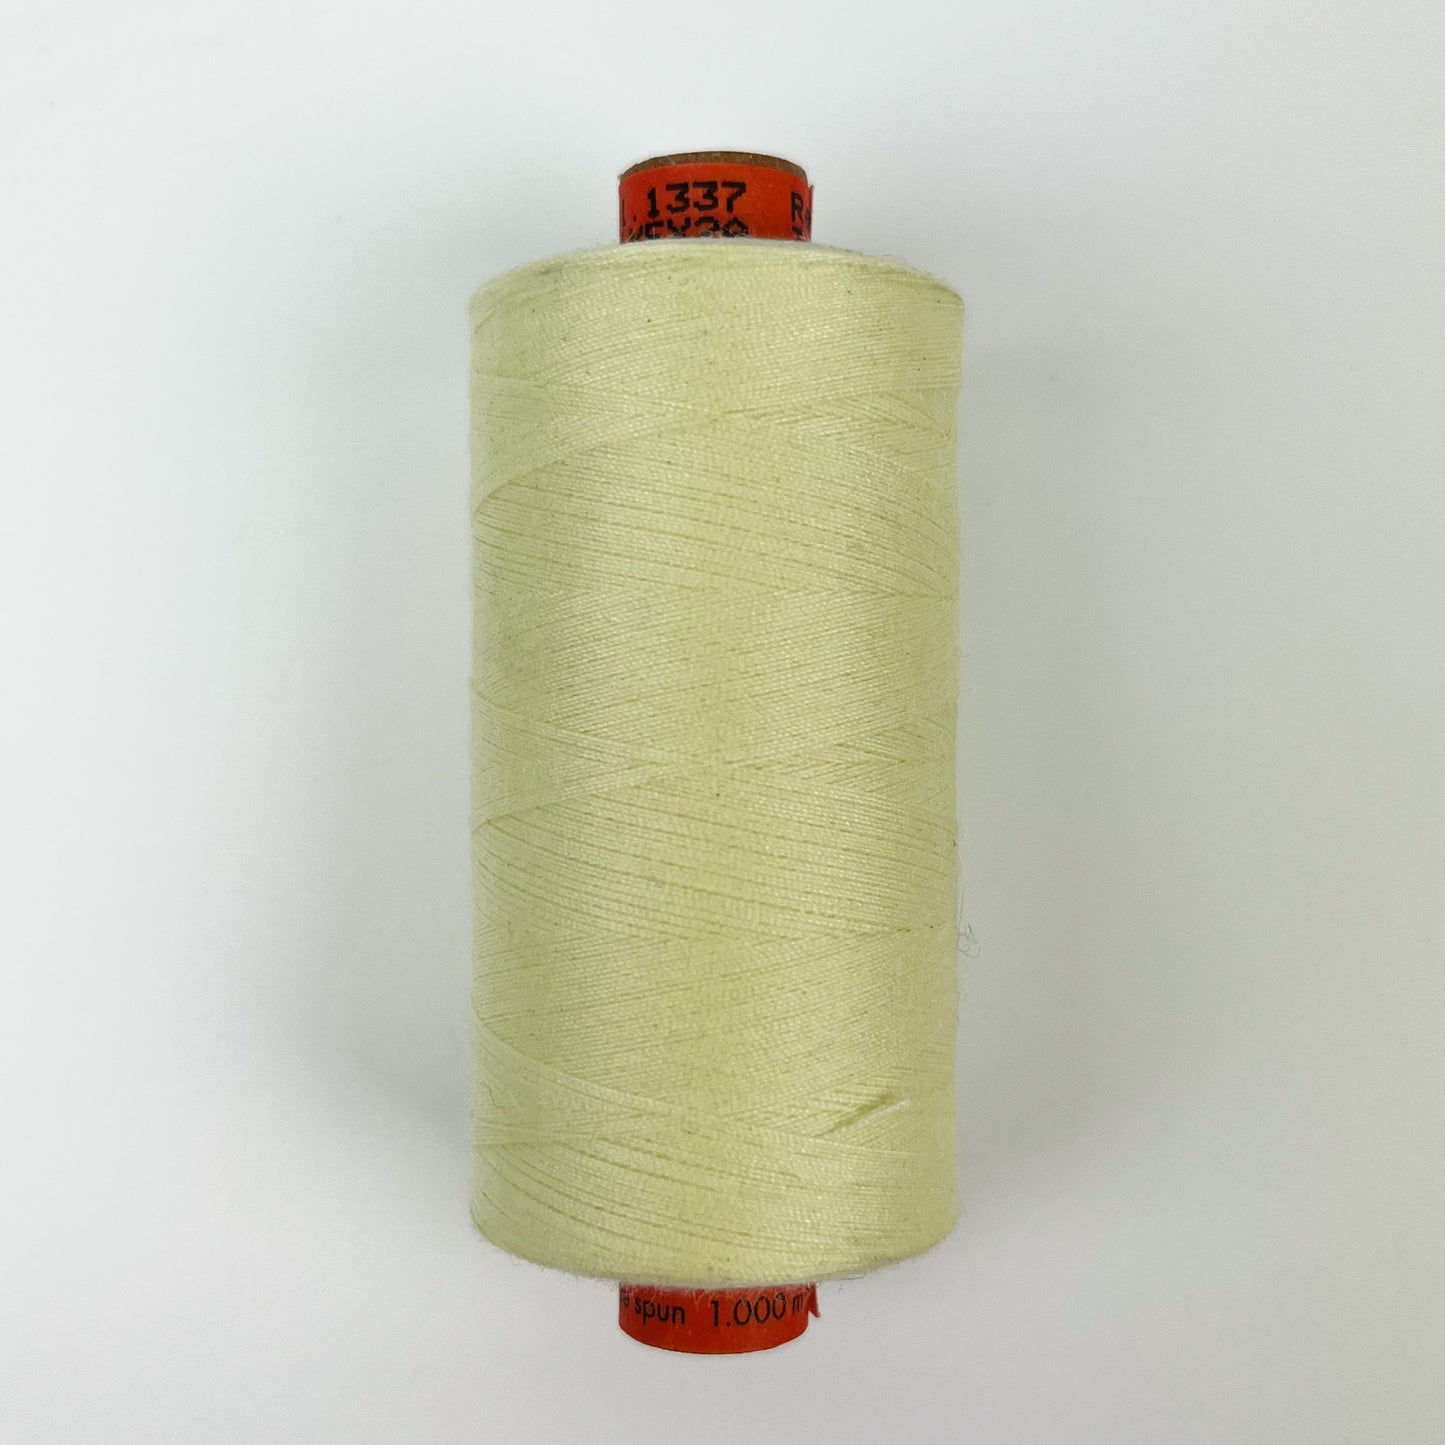 Rasant Thread -1000m - Very Pale Yellow 1337